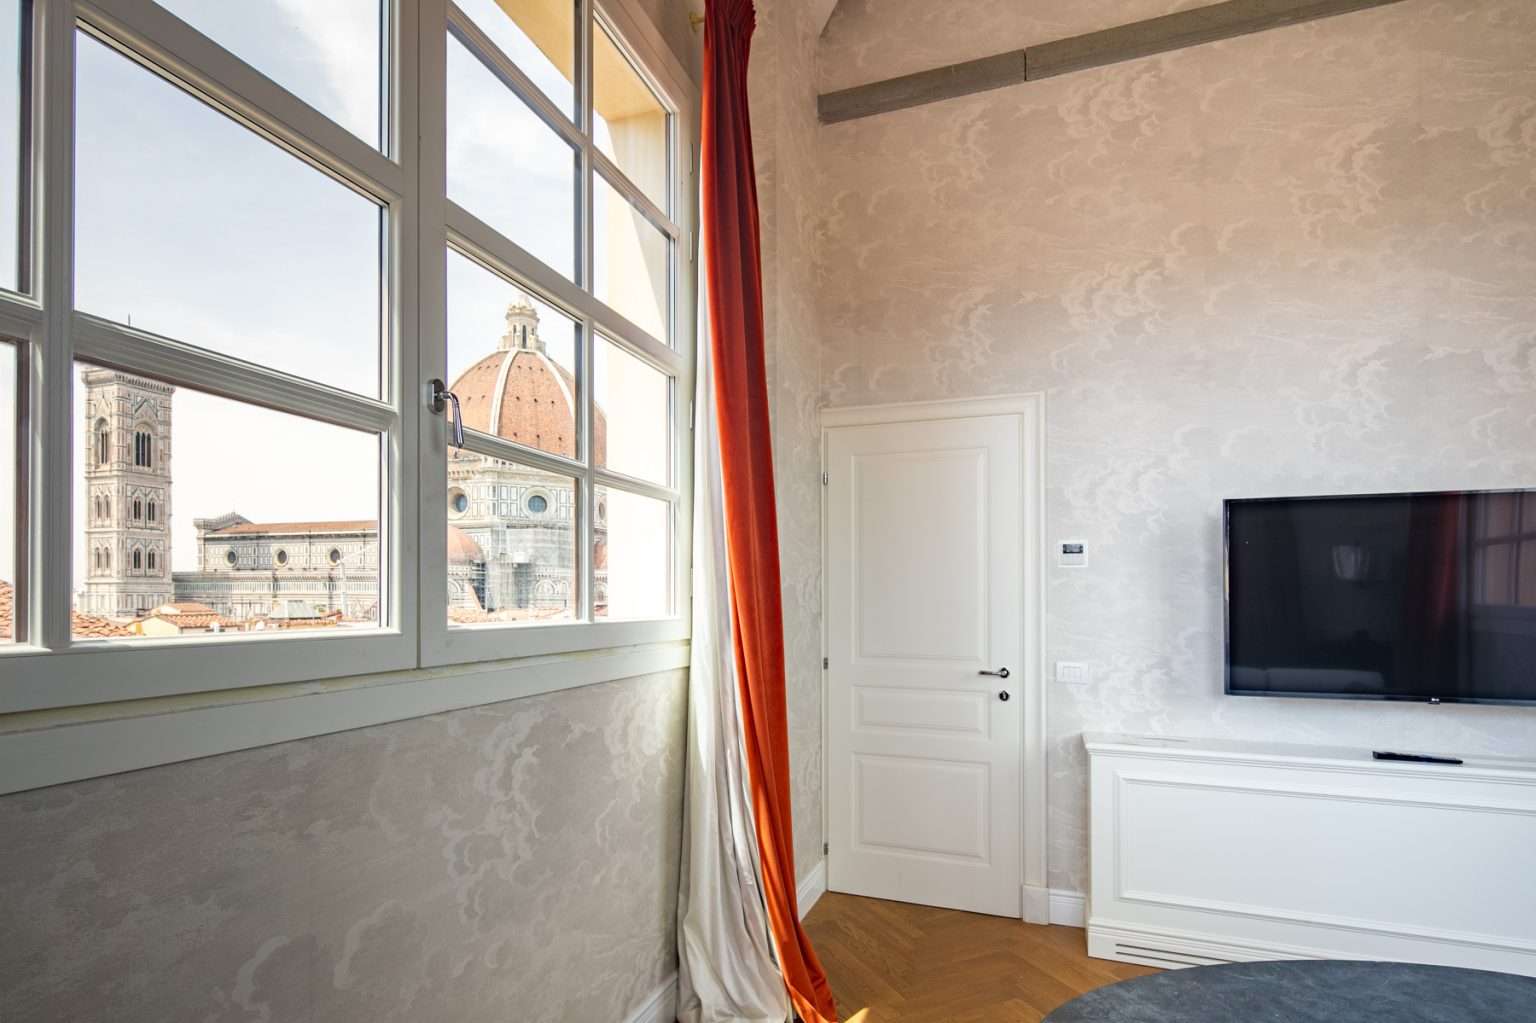 2338-elegante-attico-in-palazzo-storico-con-vista-header1